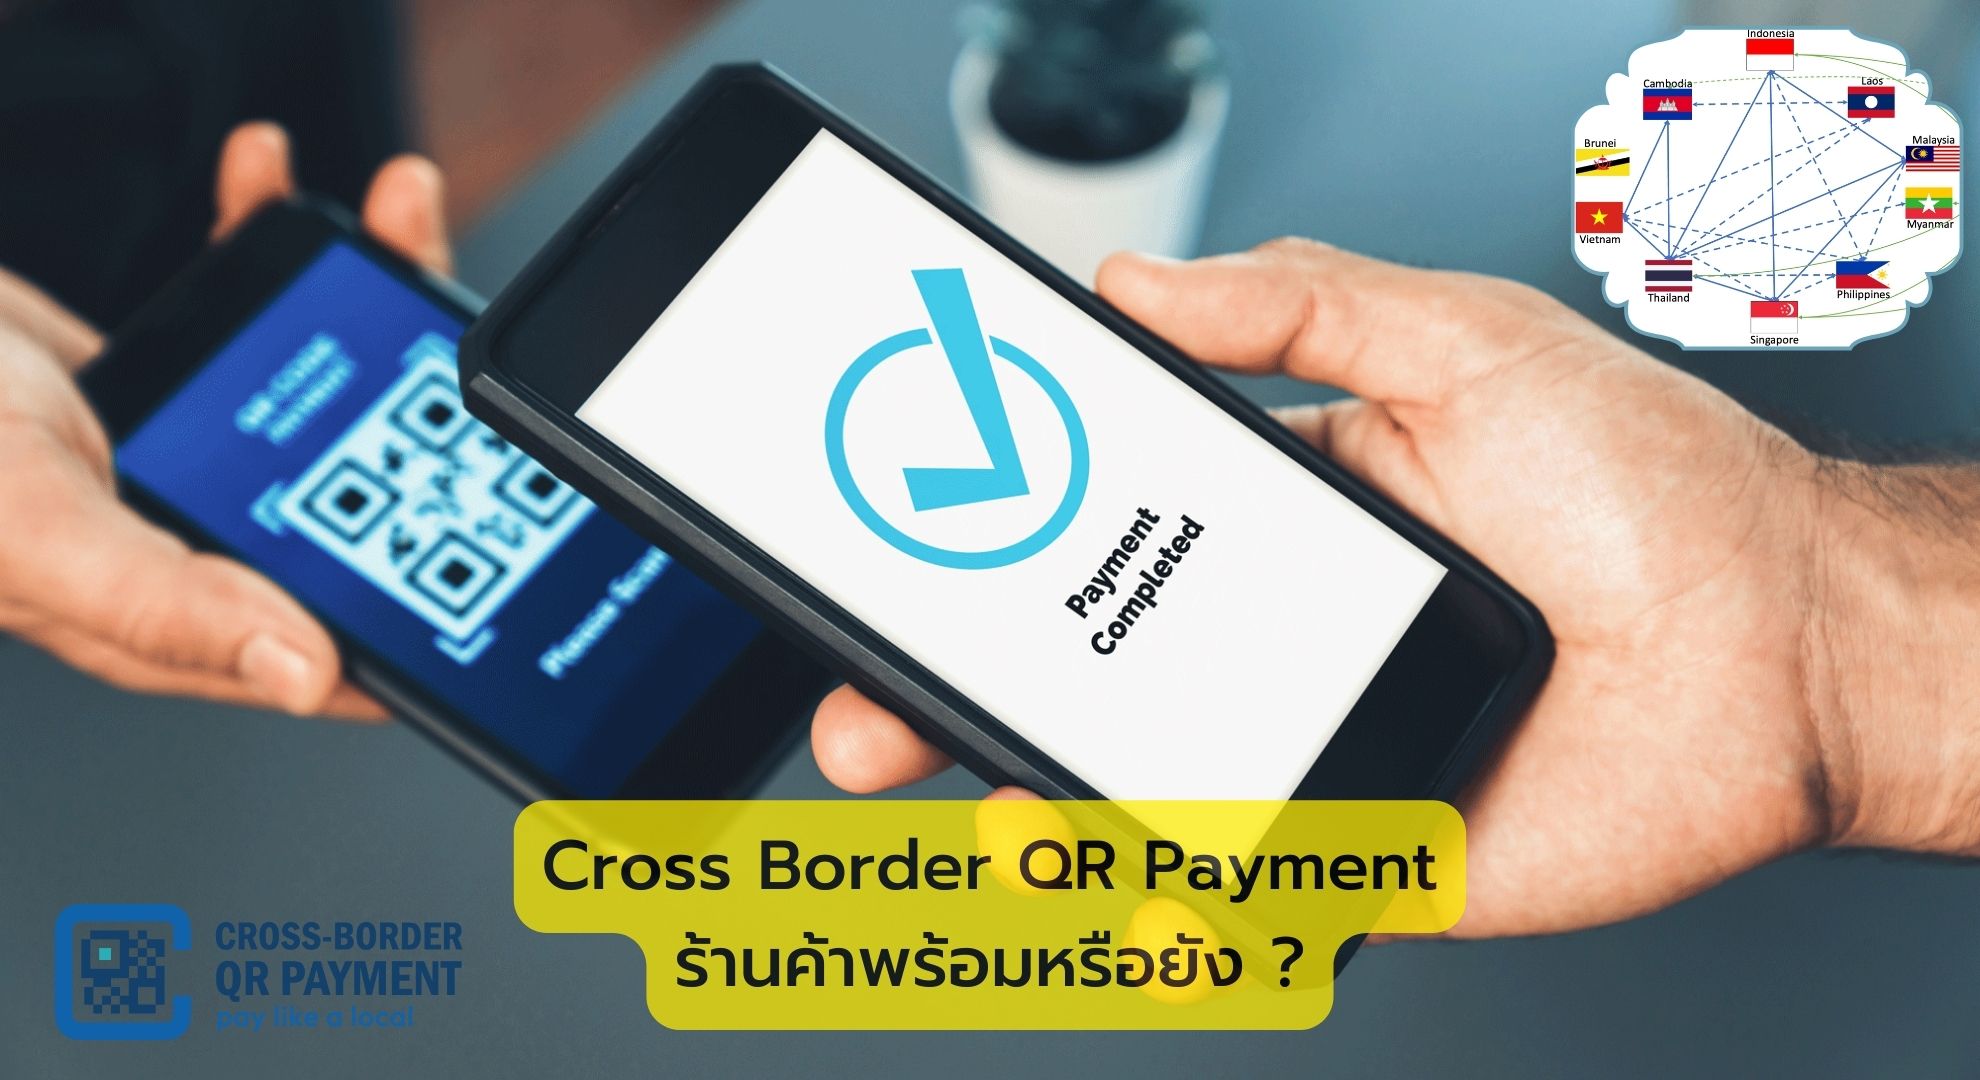 Cross Border QR Payment ร้านค้าพร้อมหรือยัง ?